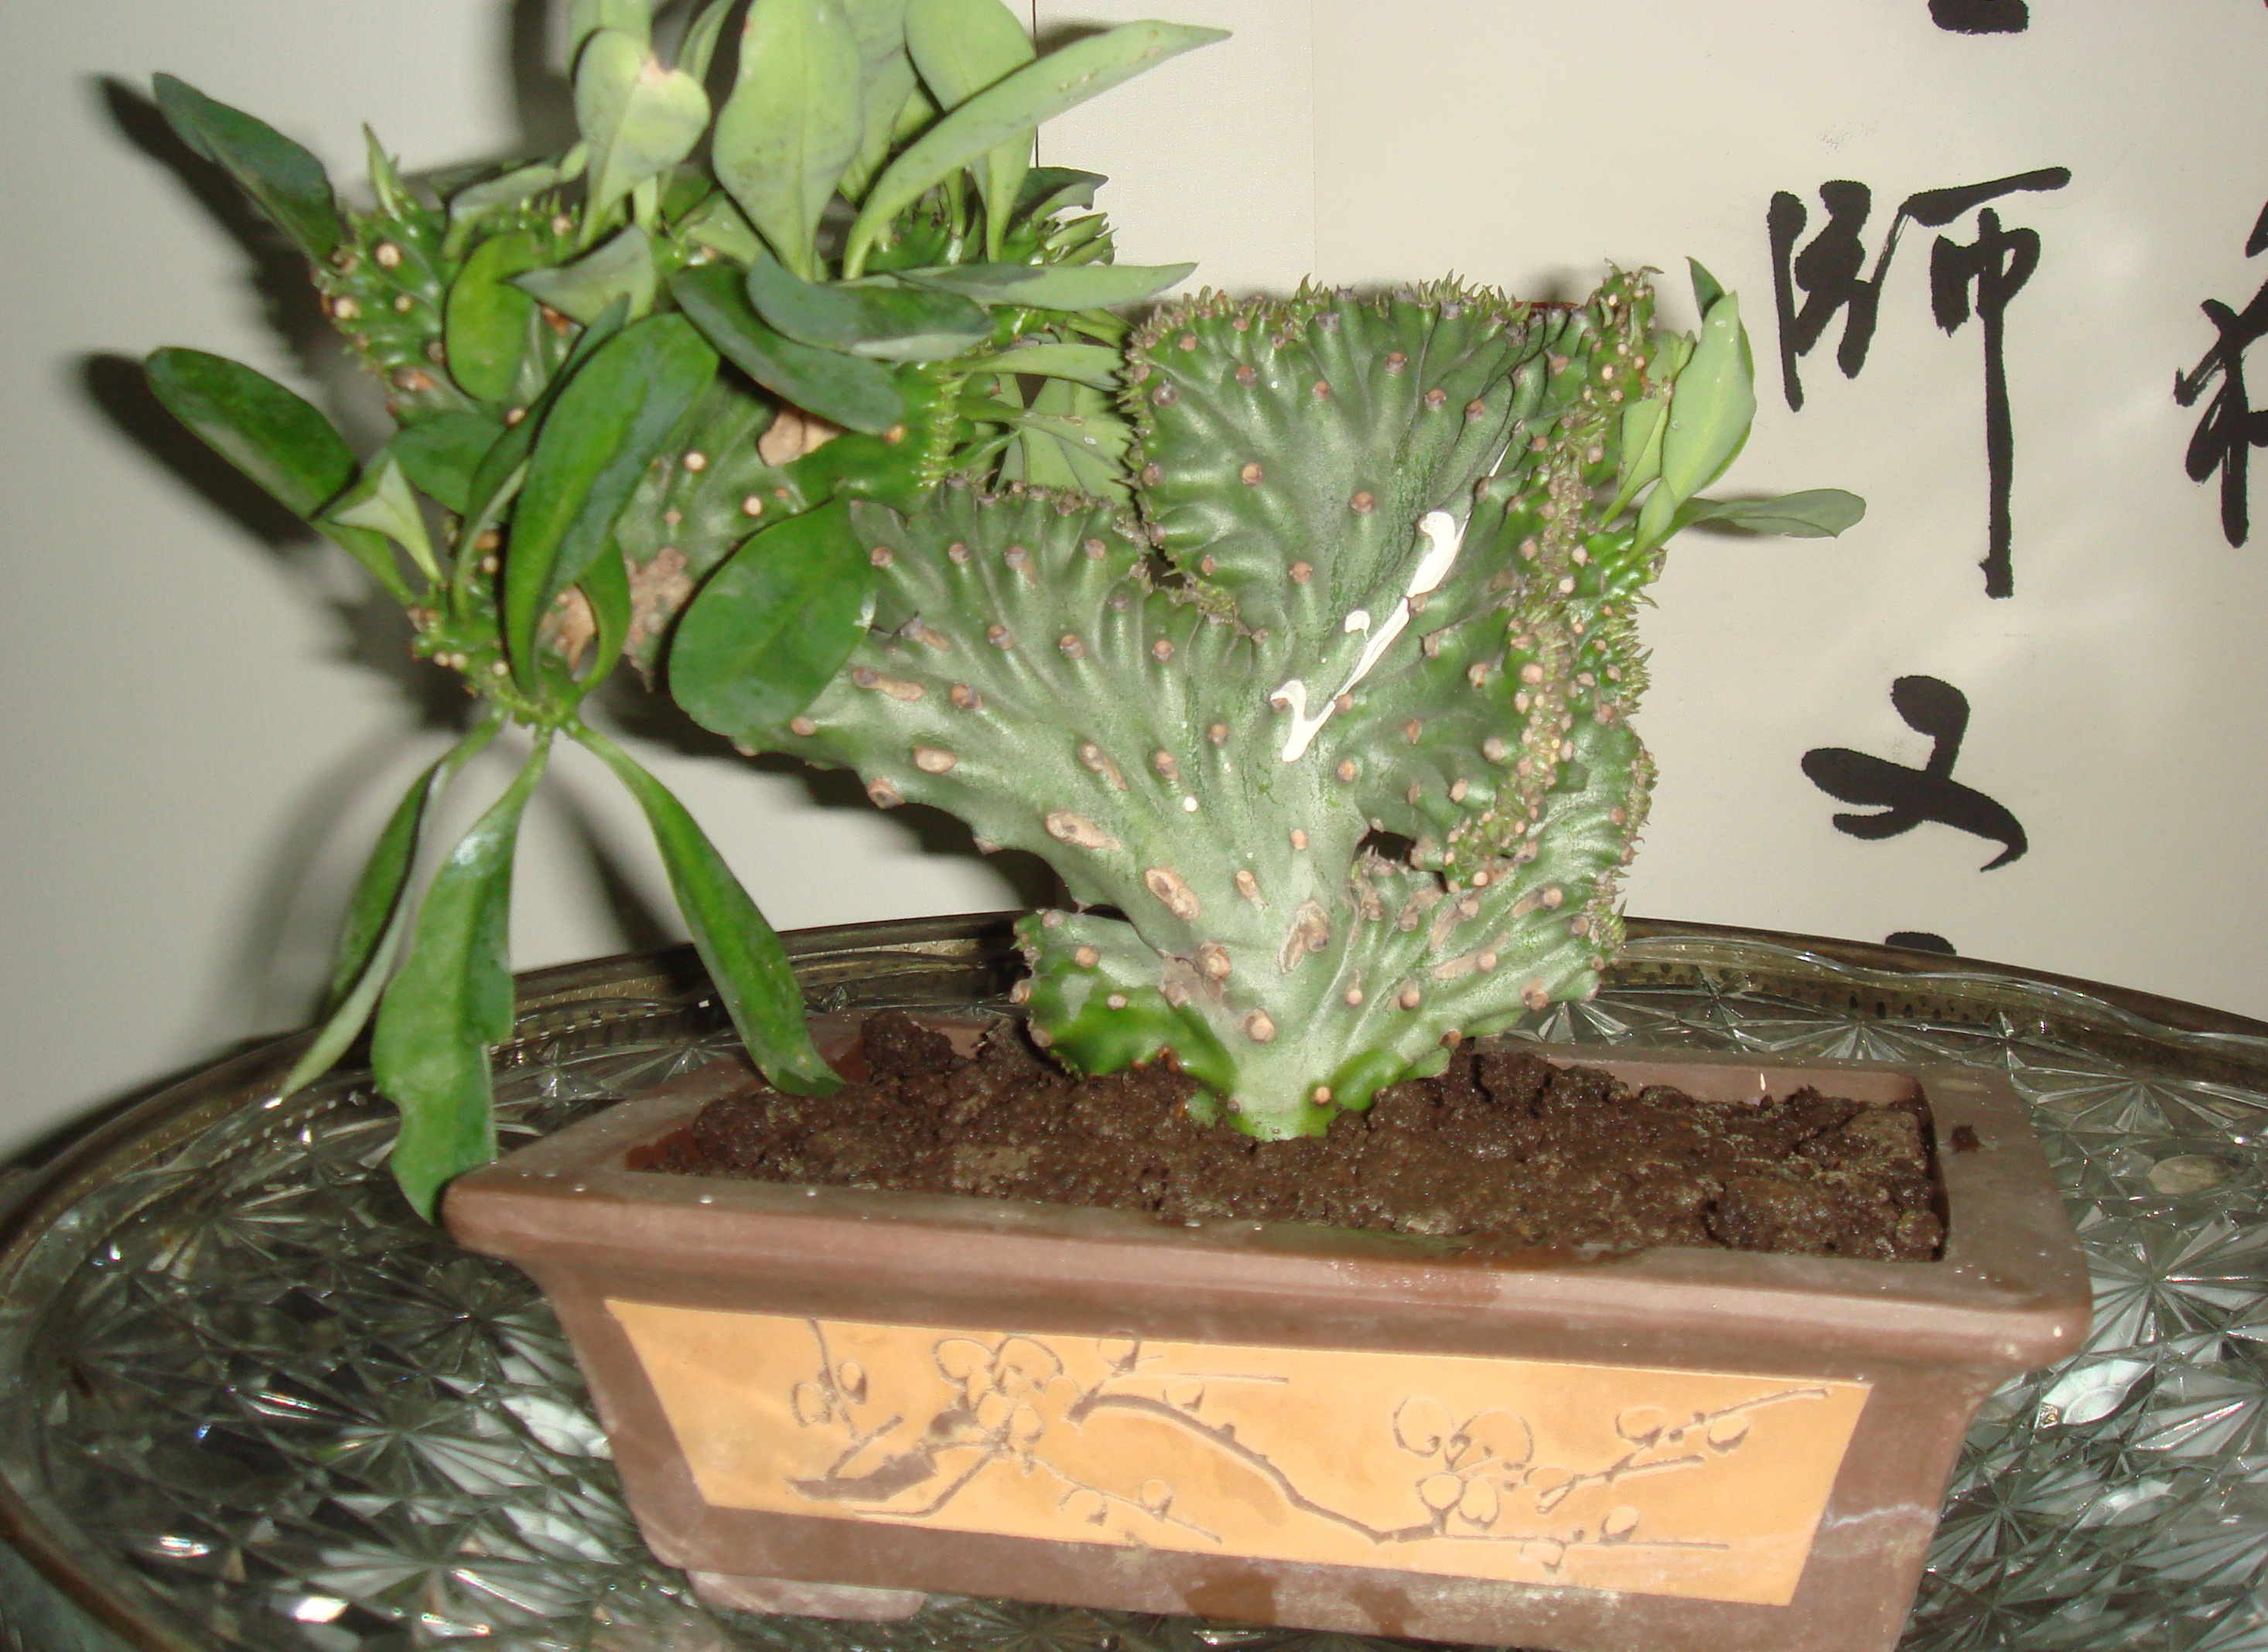 植物與醫學: 玉麒麟 Euphorbia neriifolia var. cristata 與金剛篡 Euphorbia neriifolia